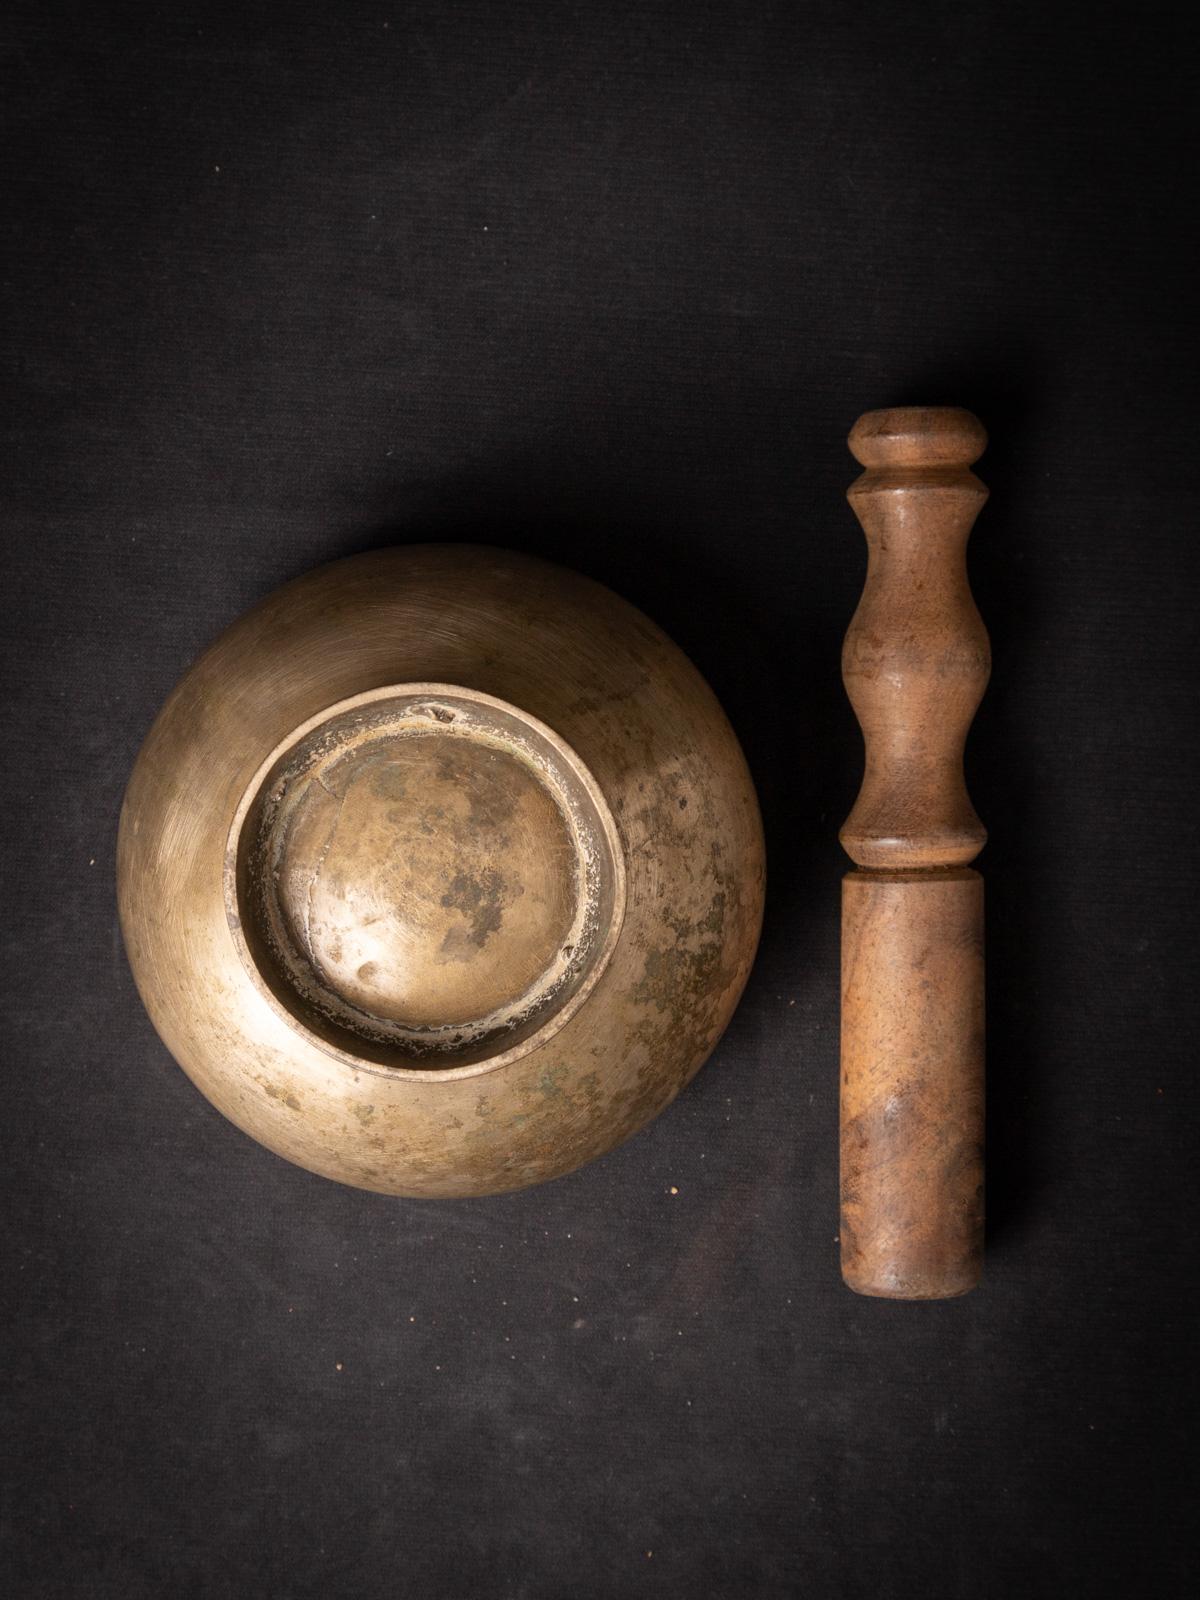 Old bronze Nepali Singing bowl
Material : bronze
8,8 cm high
13,5 cm diameter
Early 20th century
Weight: 613 grams
Originating from Nepal